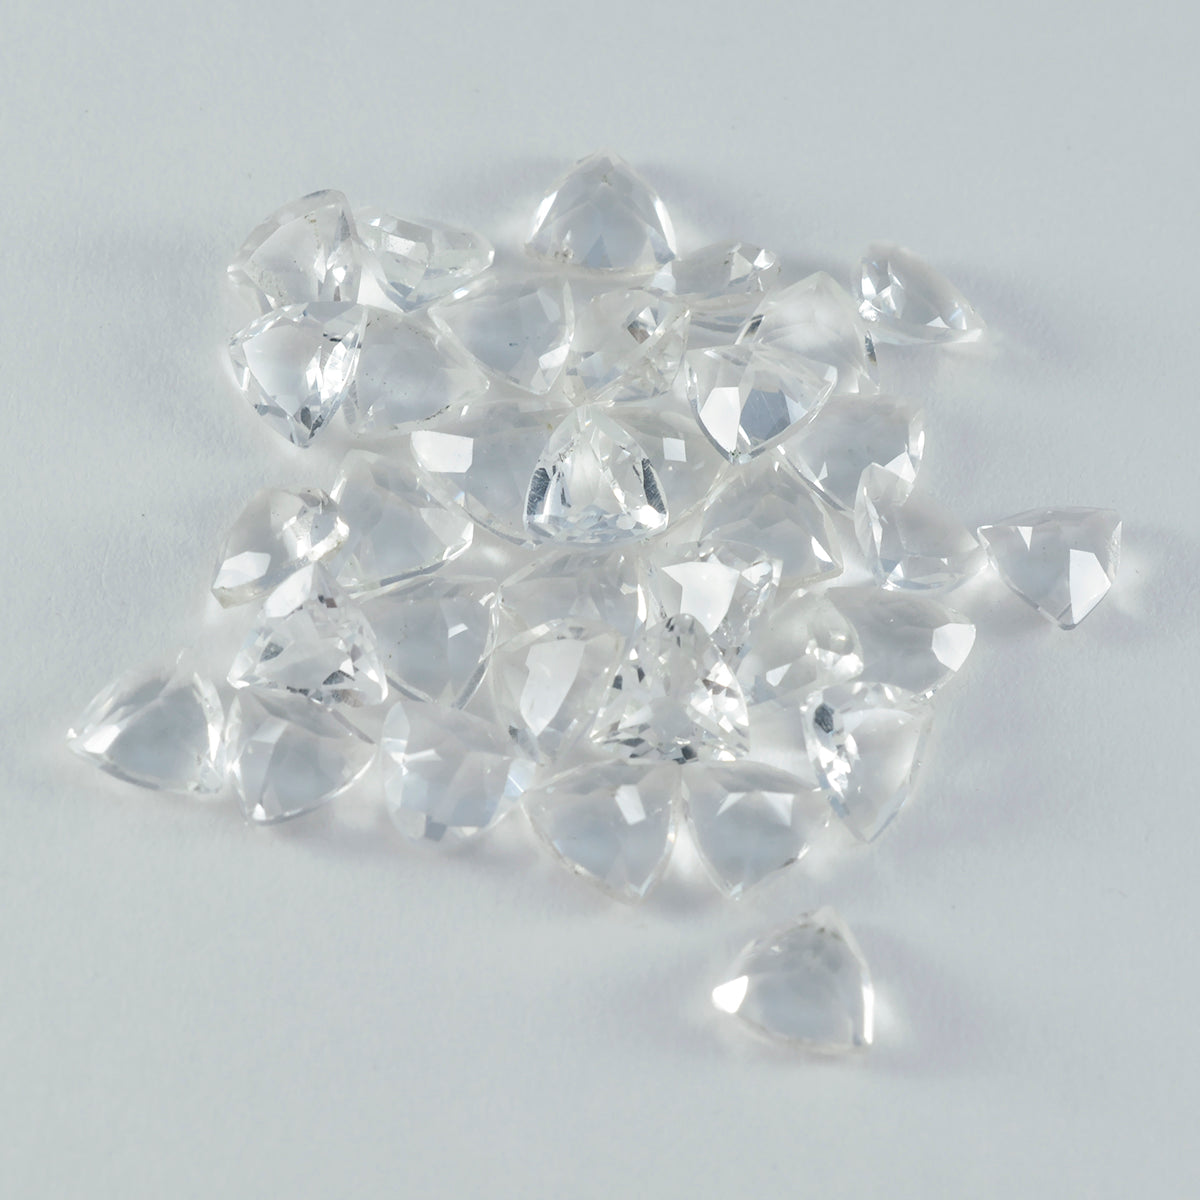 Riyogems 1PC White Crystal Quartz Faceted 7x7 mm Trillion Shape superb Quality Gemstone